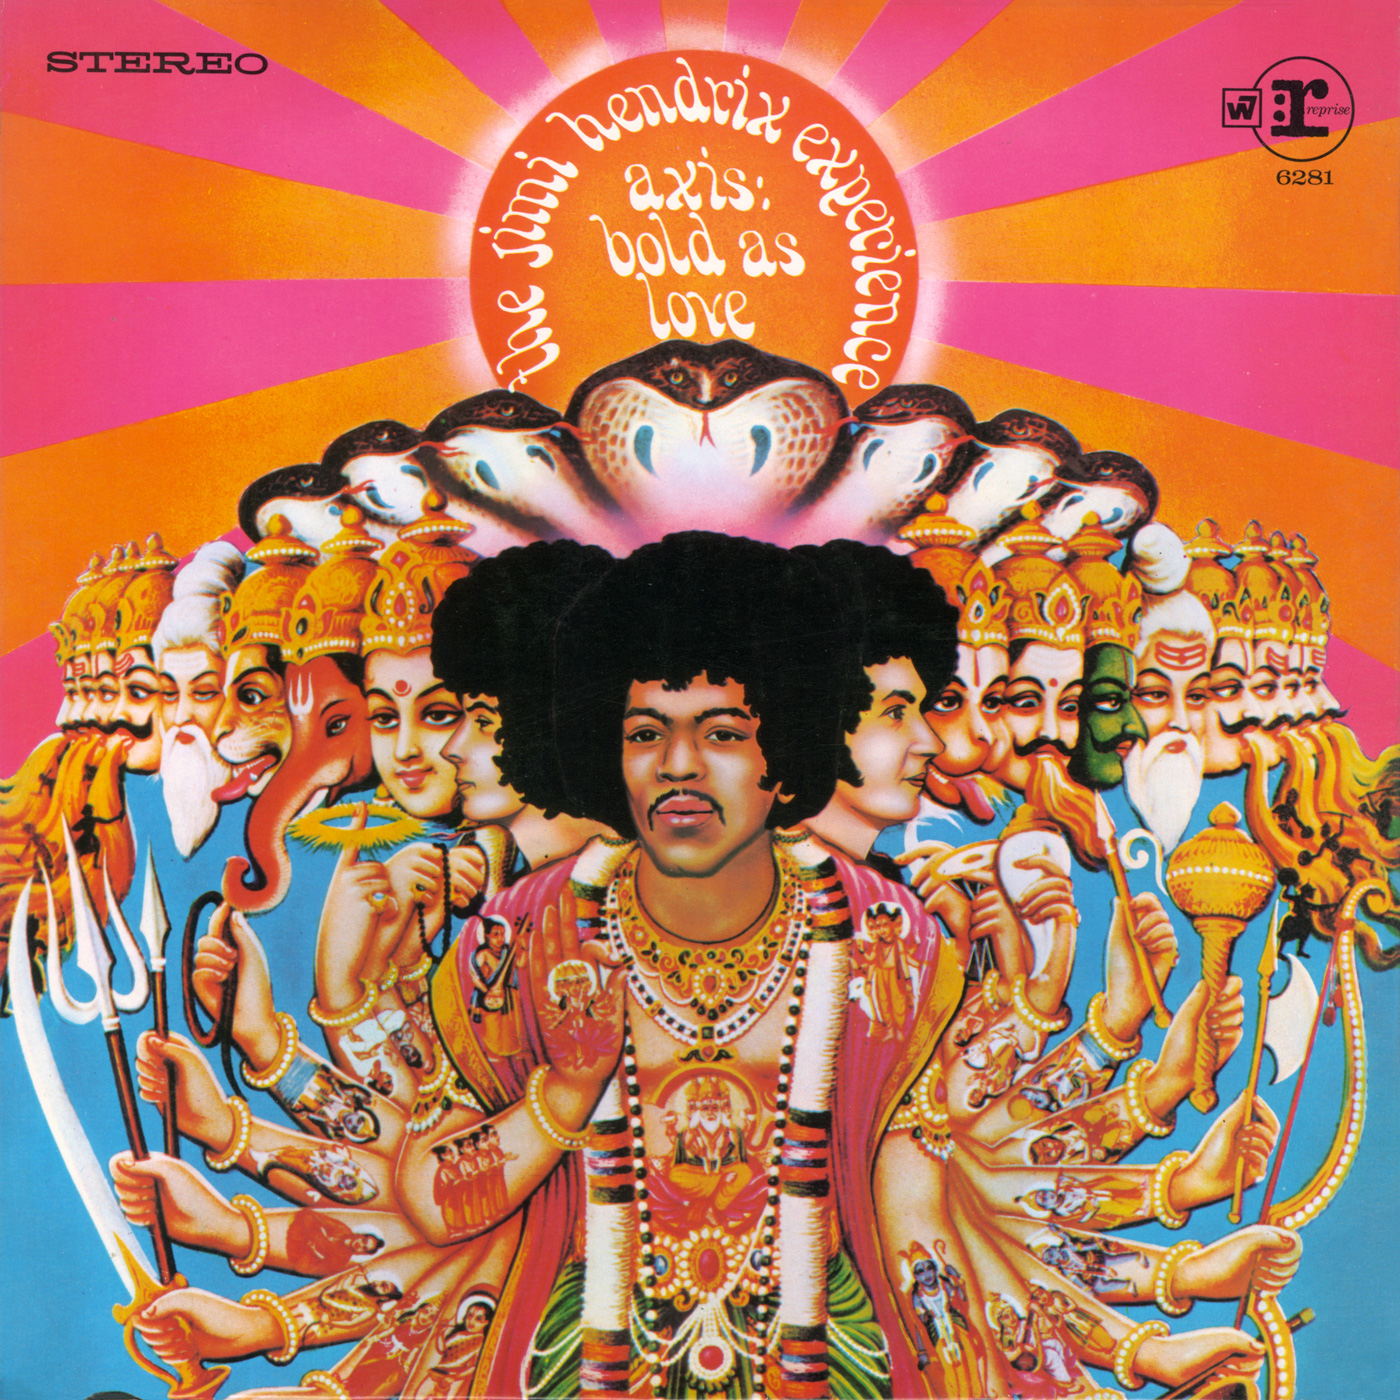 Axis: Bold As Love – The Jimi Hendrix Experience